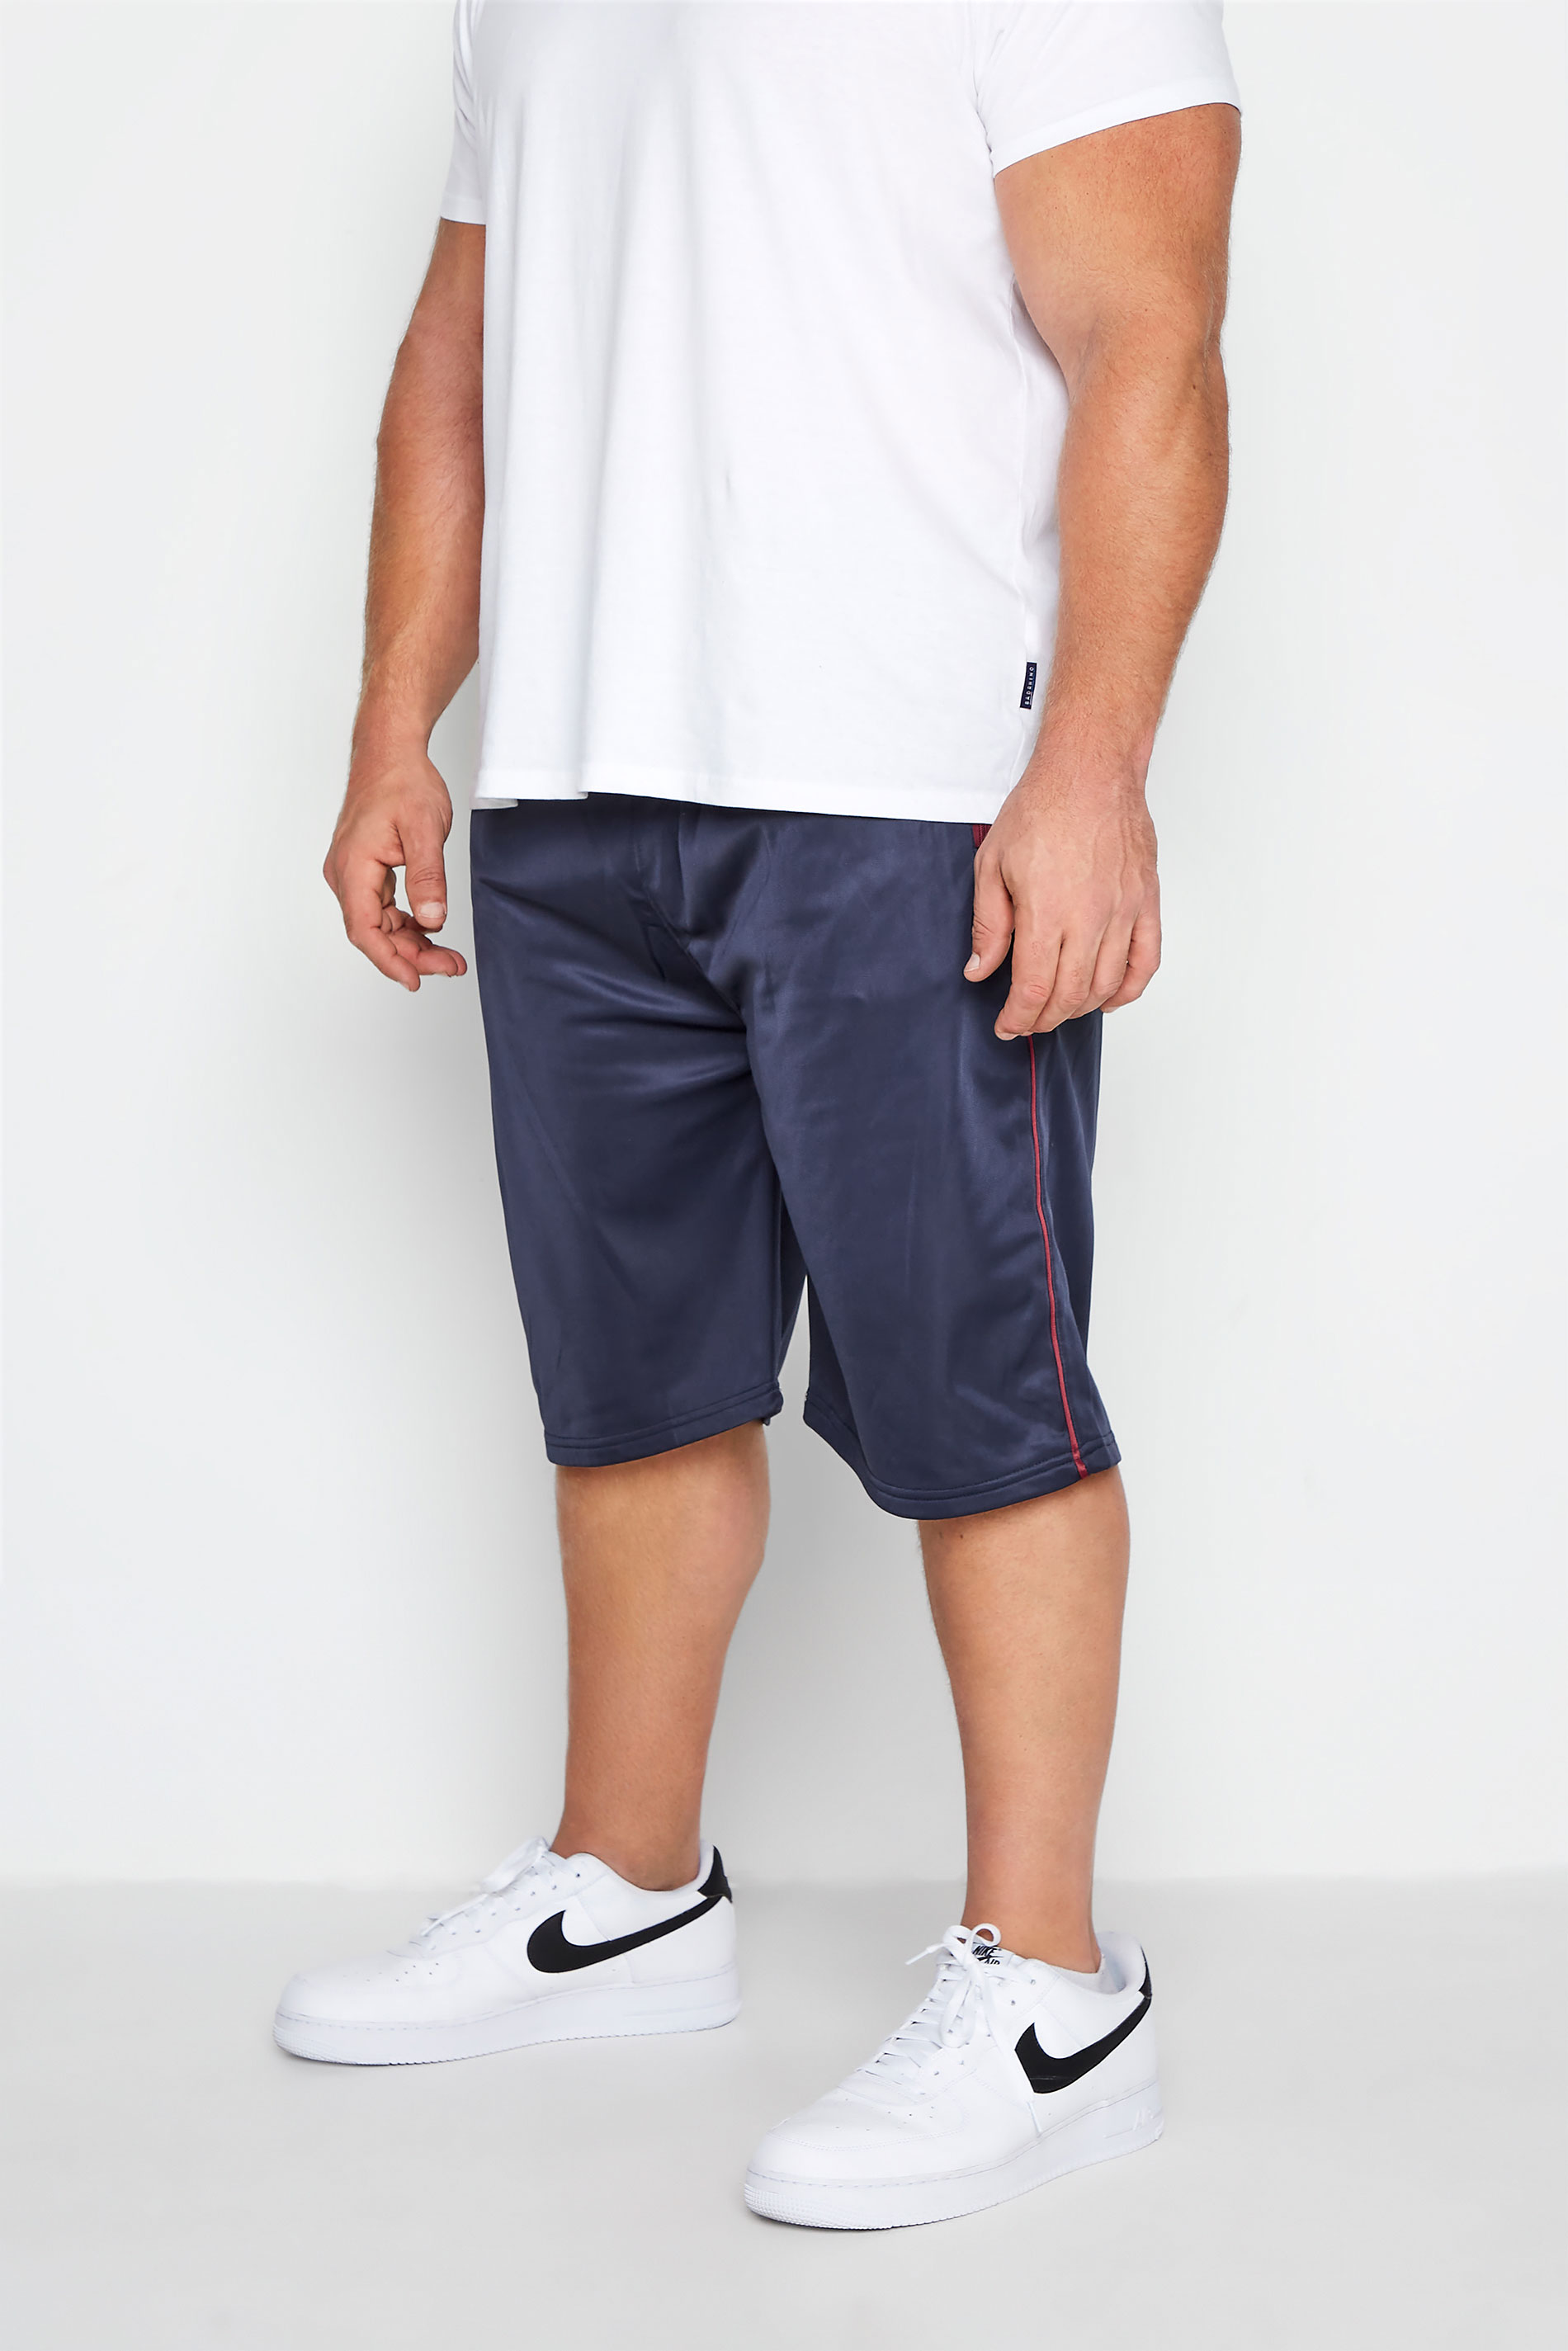 KAM Big & Tall Navy Blue Contrast Sports Shorts_A.jpg